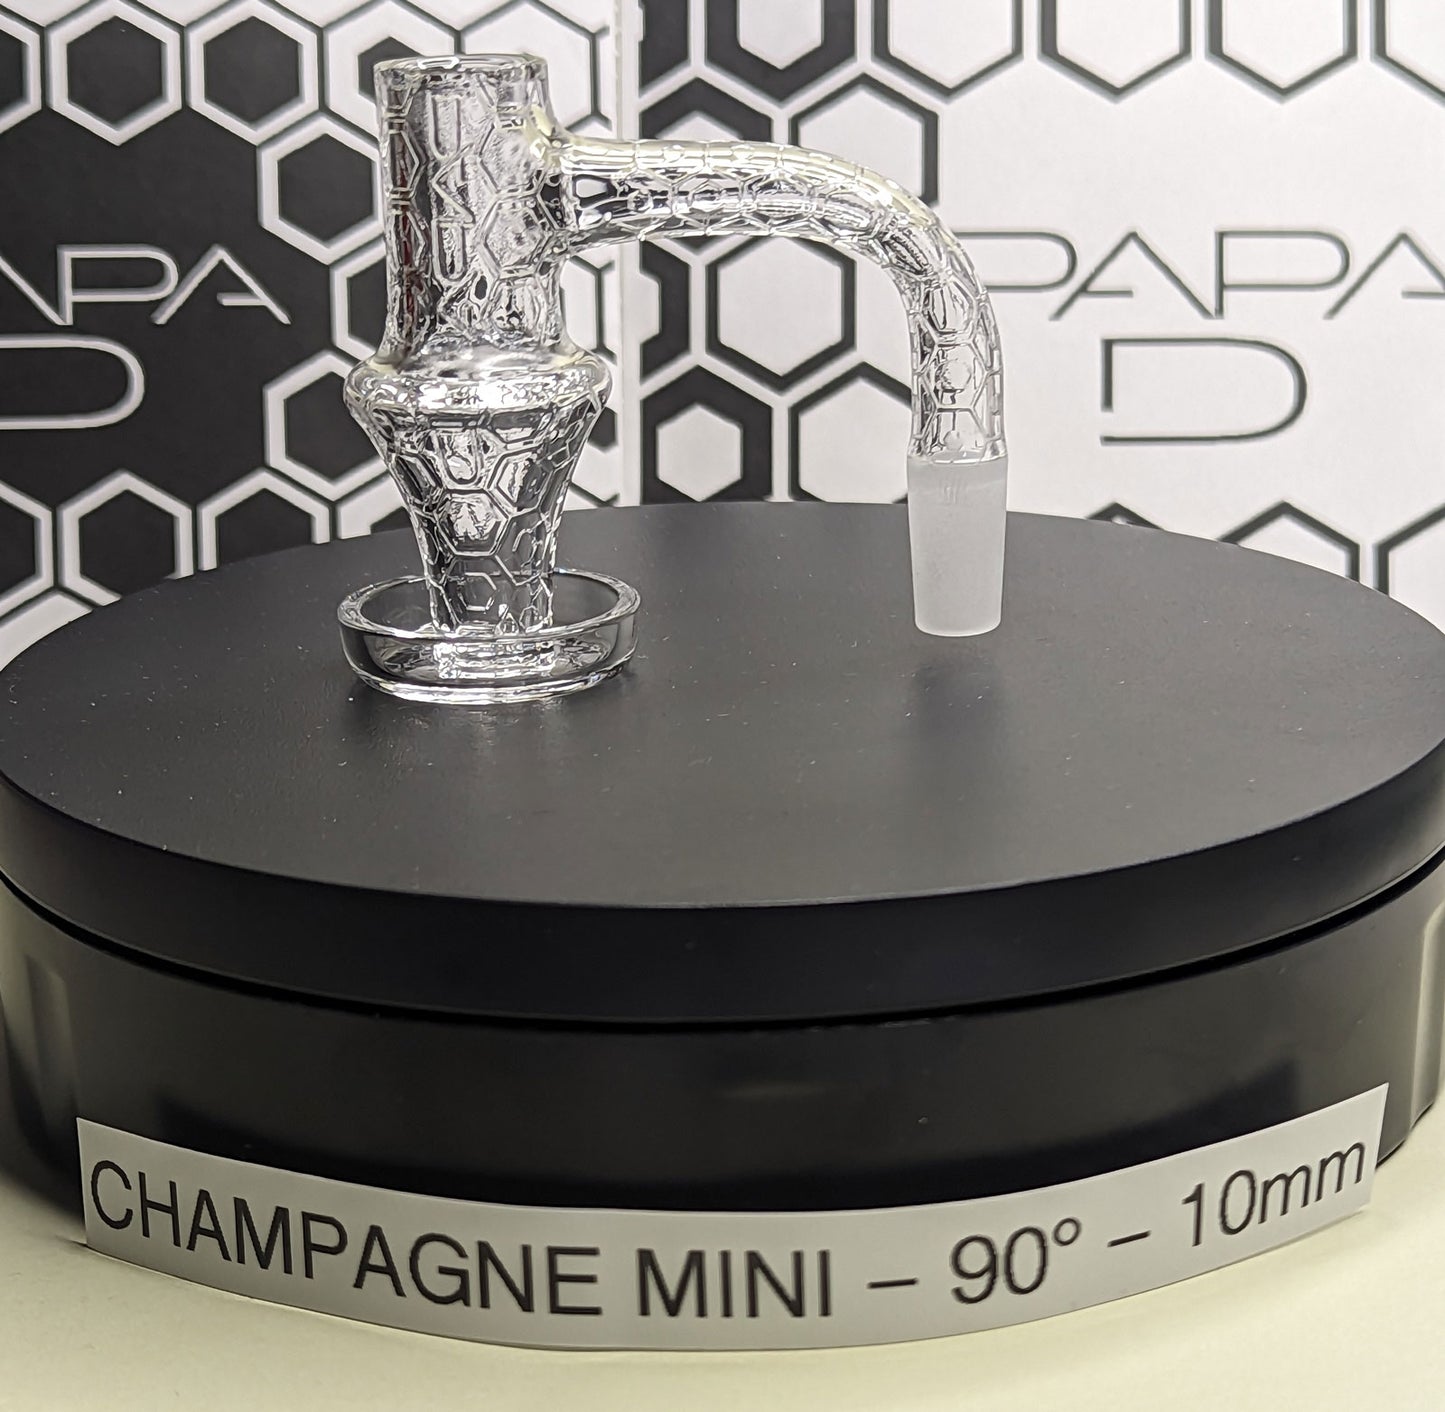 Champagne Mini - 90º - 10mm